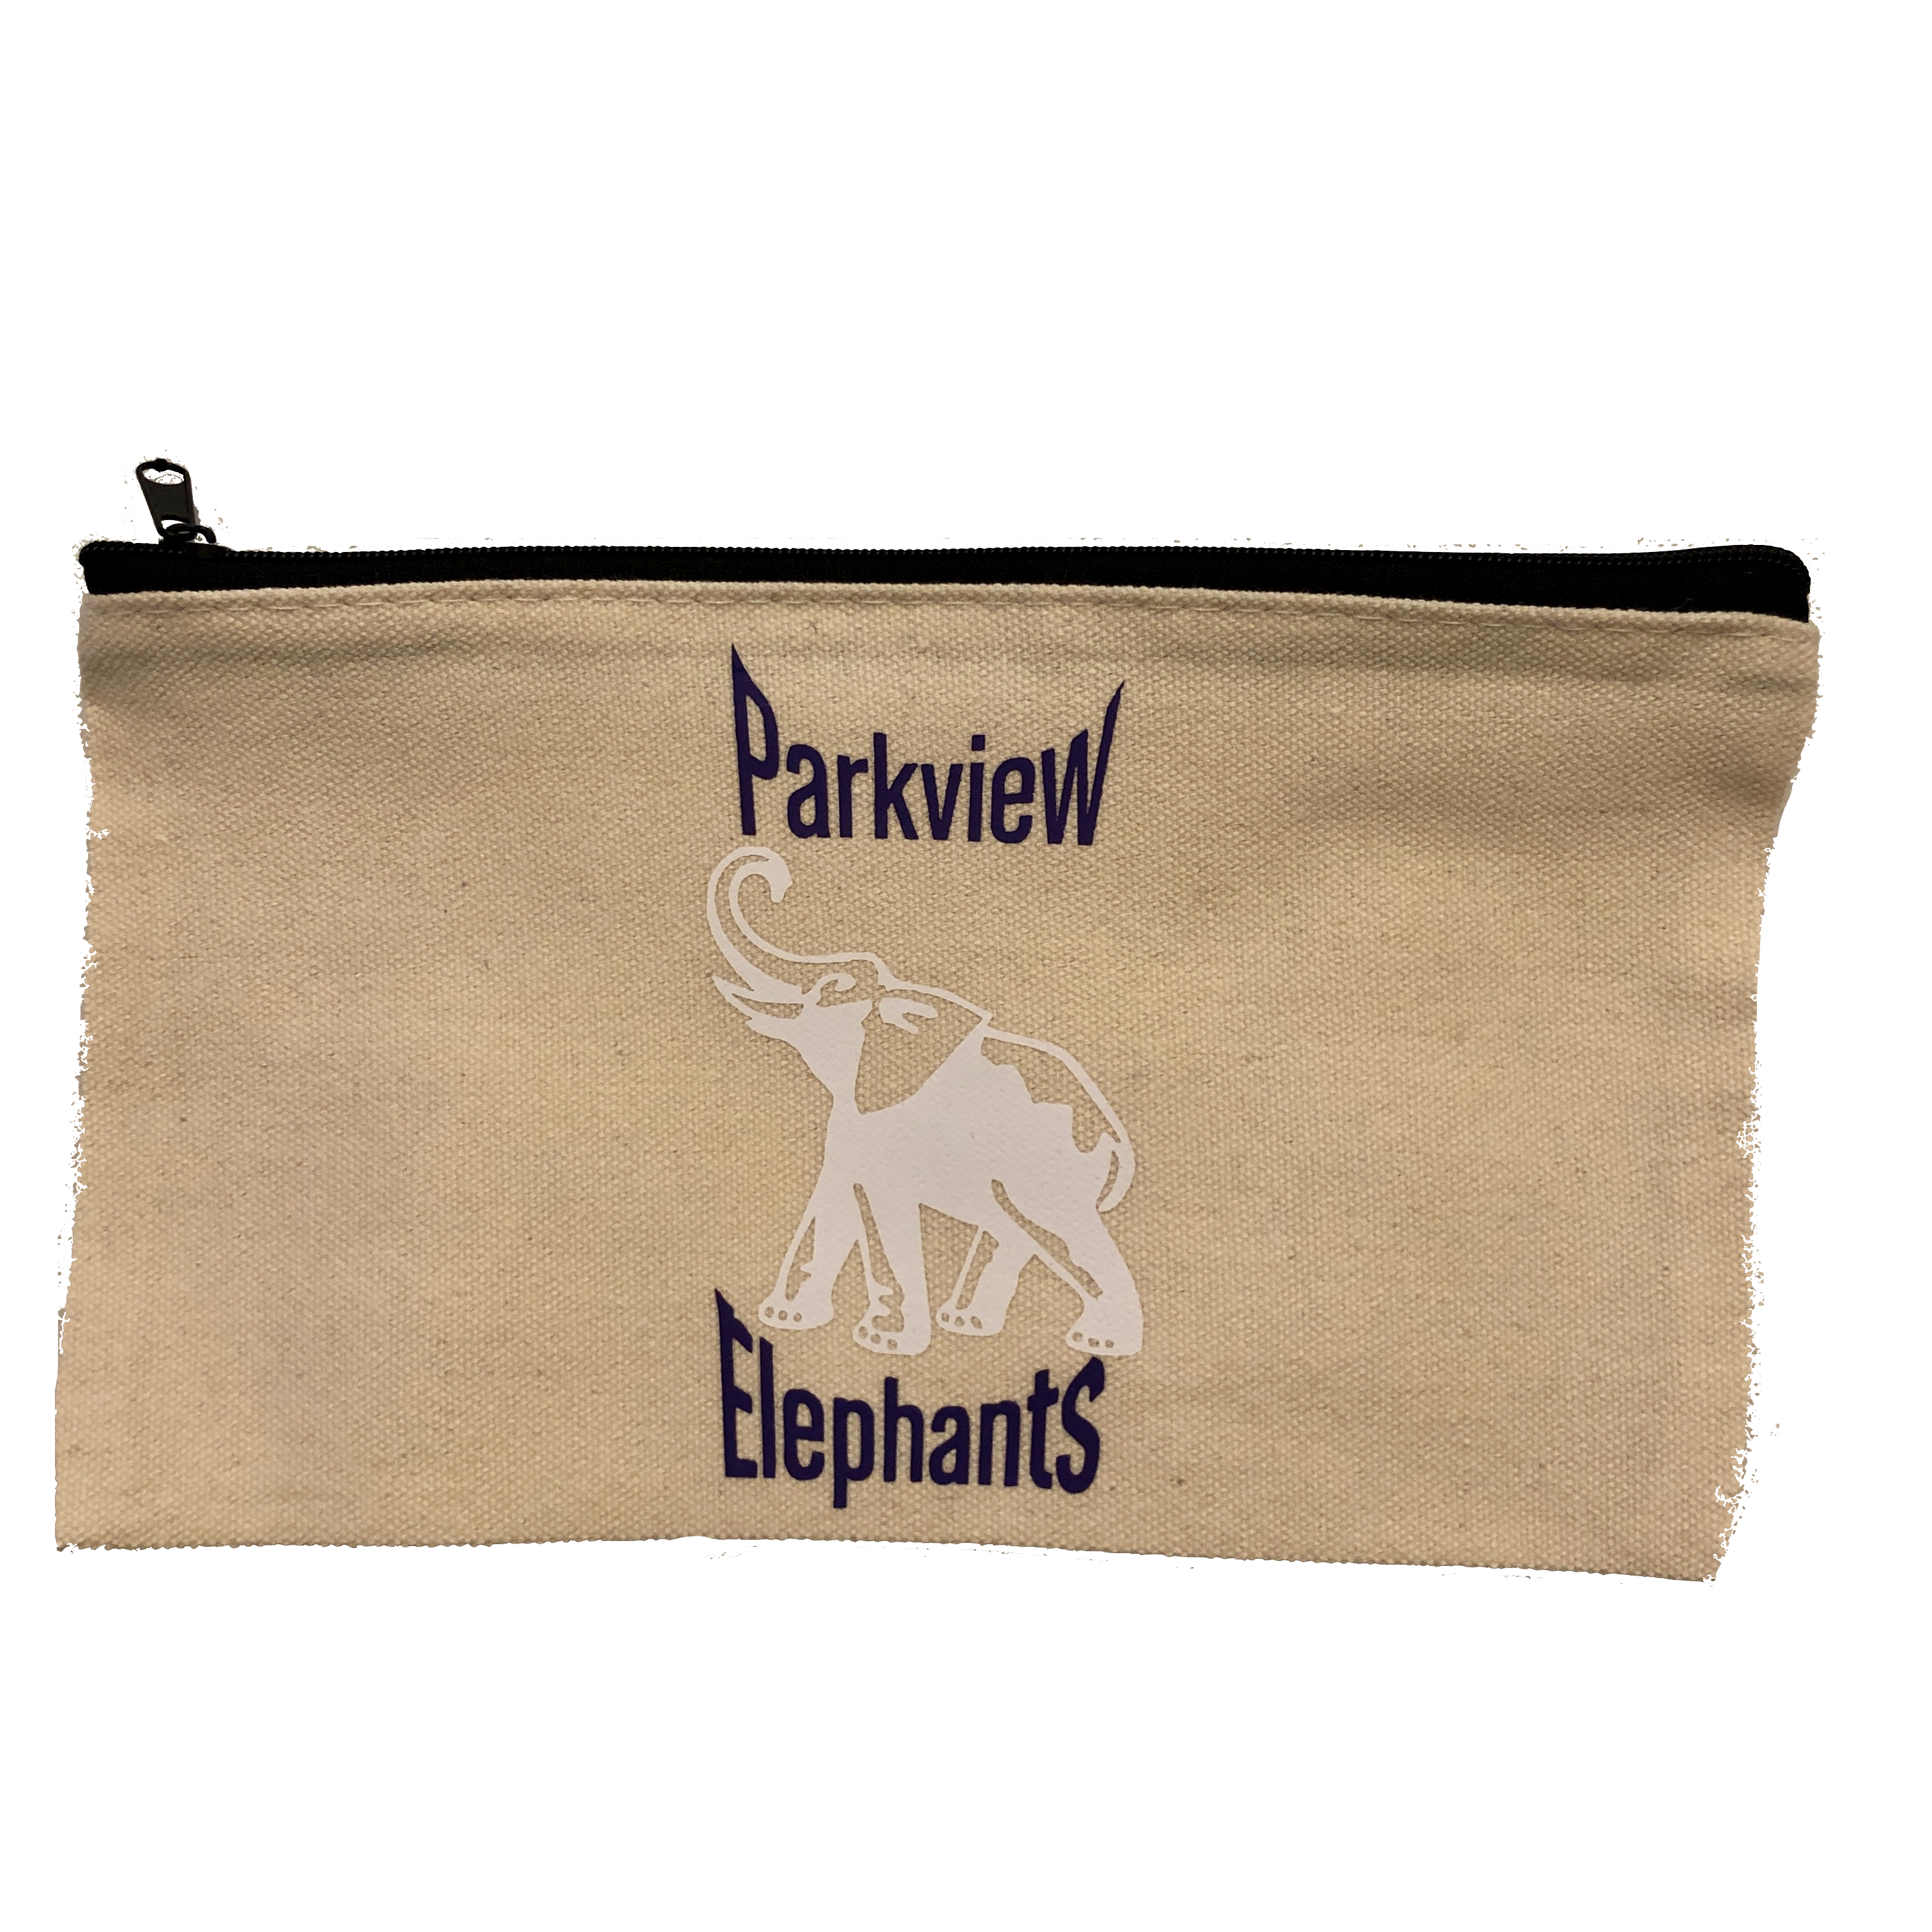 Parkview Elephants Pouch